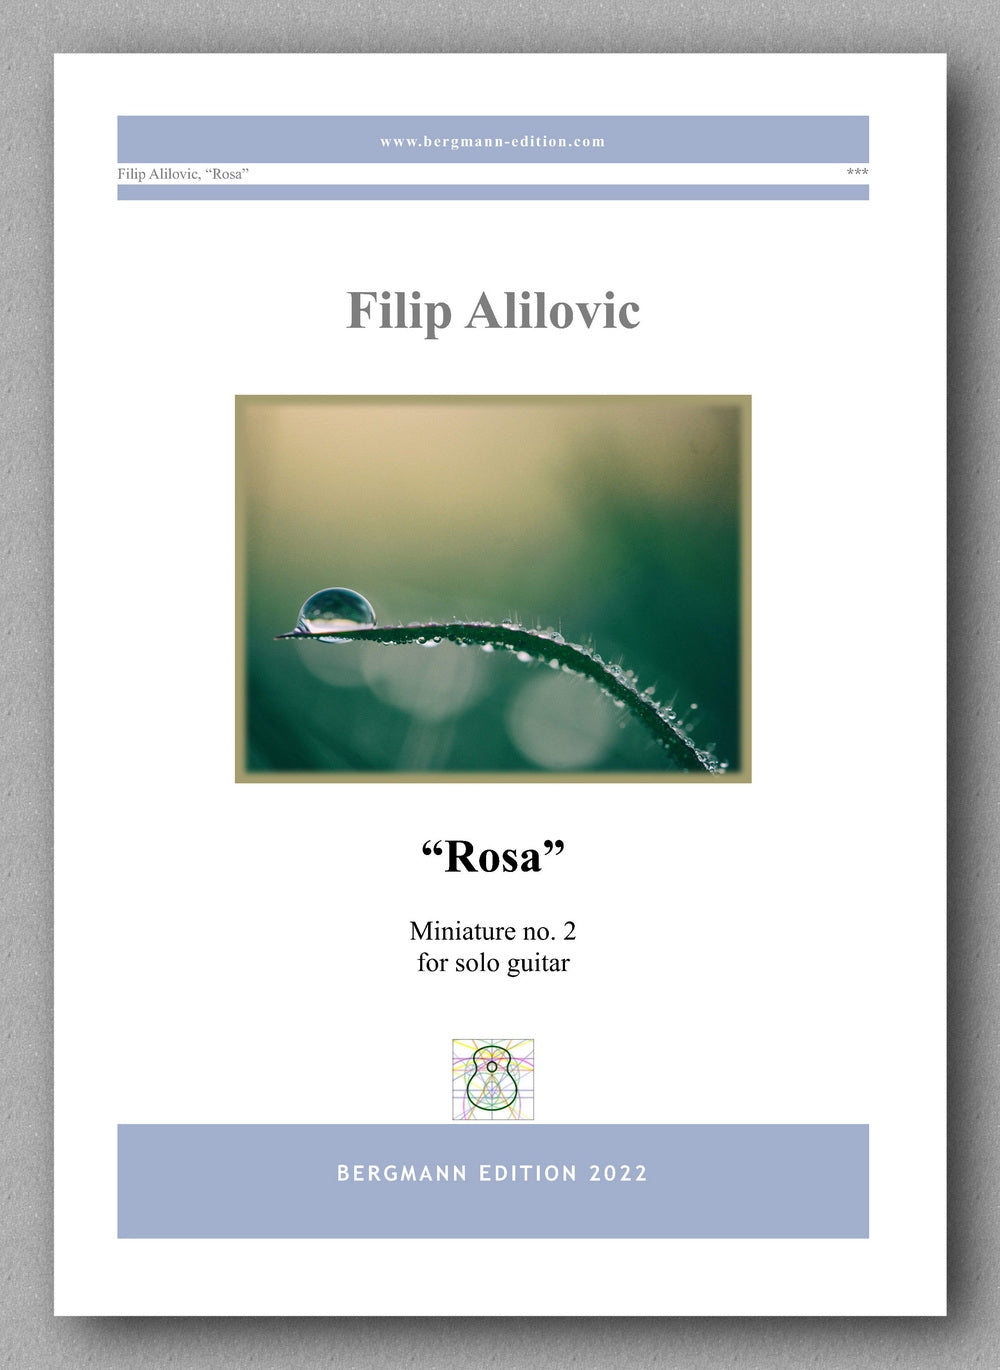 "Rosa" Miniature No. 2 by Filip Alilovic - preview of the cover